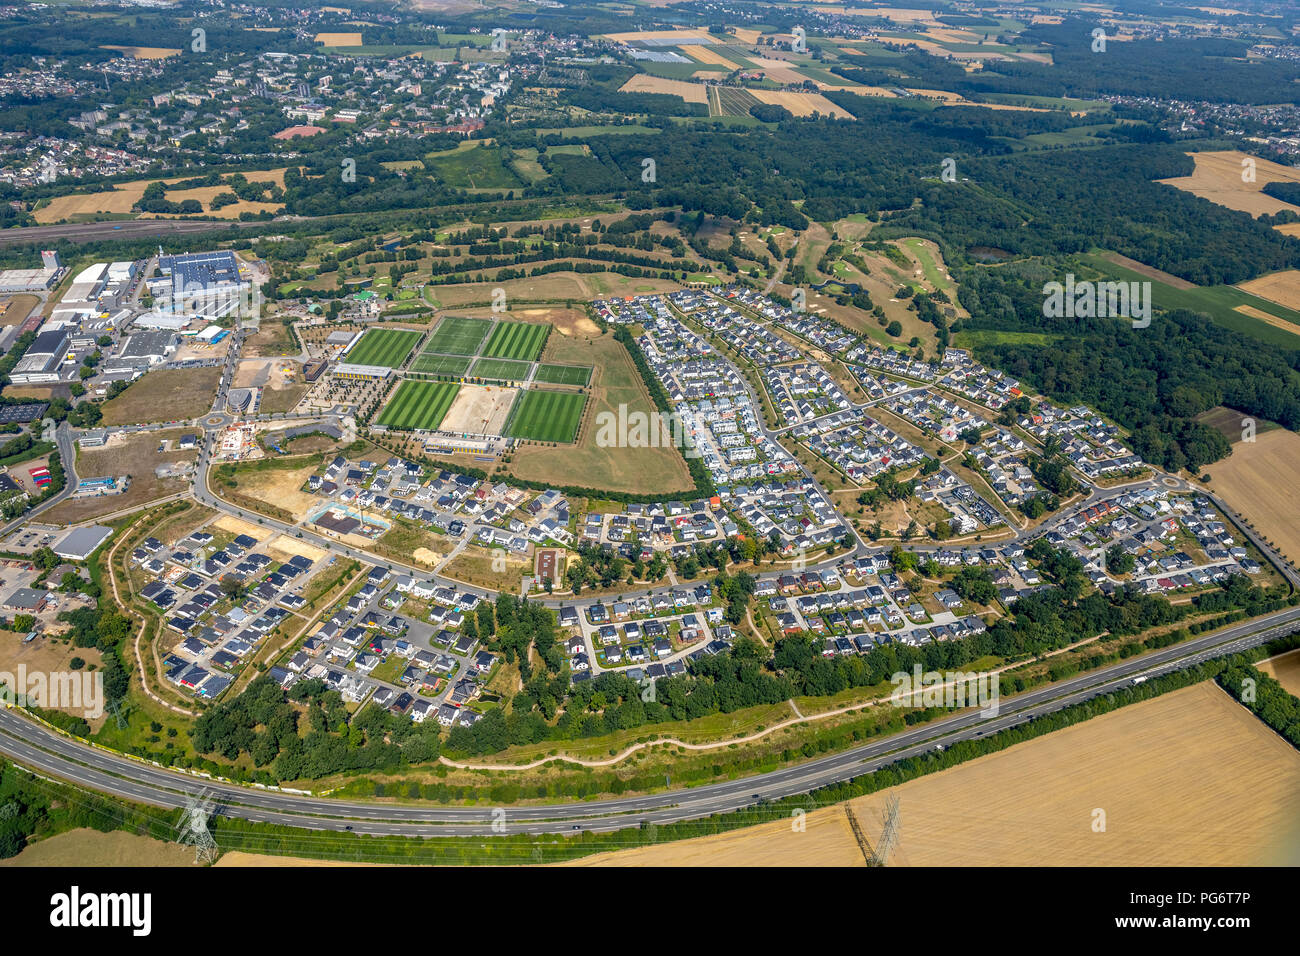 Brackeler field, Hohenbuschei construction area, BVB training center, Dortmund, Ruhr area, North Rhine-Westphalia, Germany, DEU, Europe, aerial view,  Stock Photo